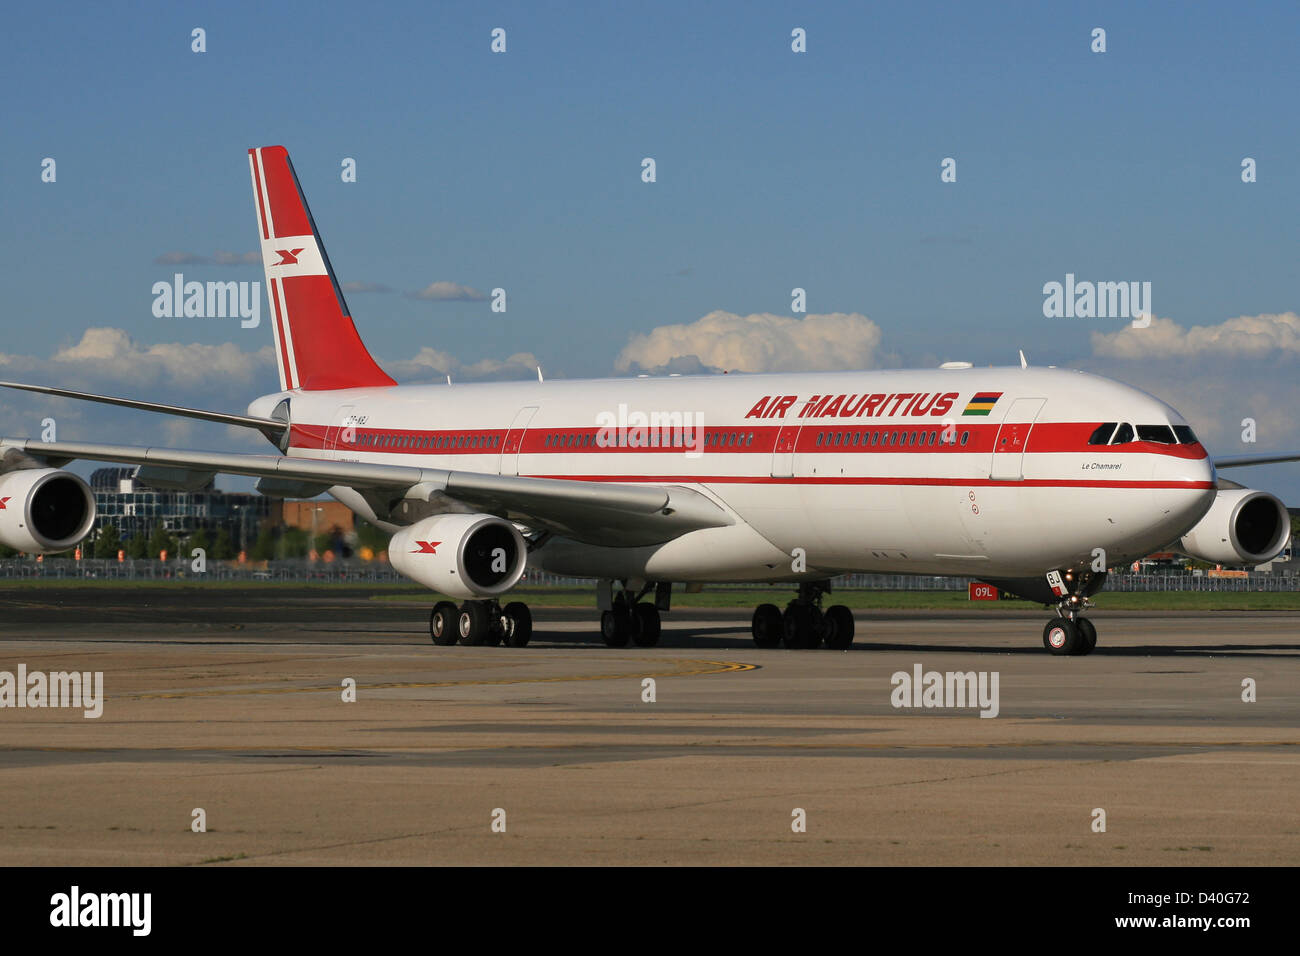 AIR MAURITIUS AIRBUS A340 Stock Photo - Alamy